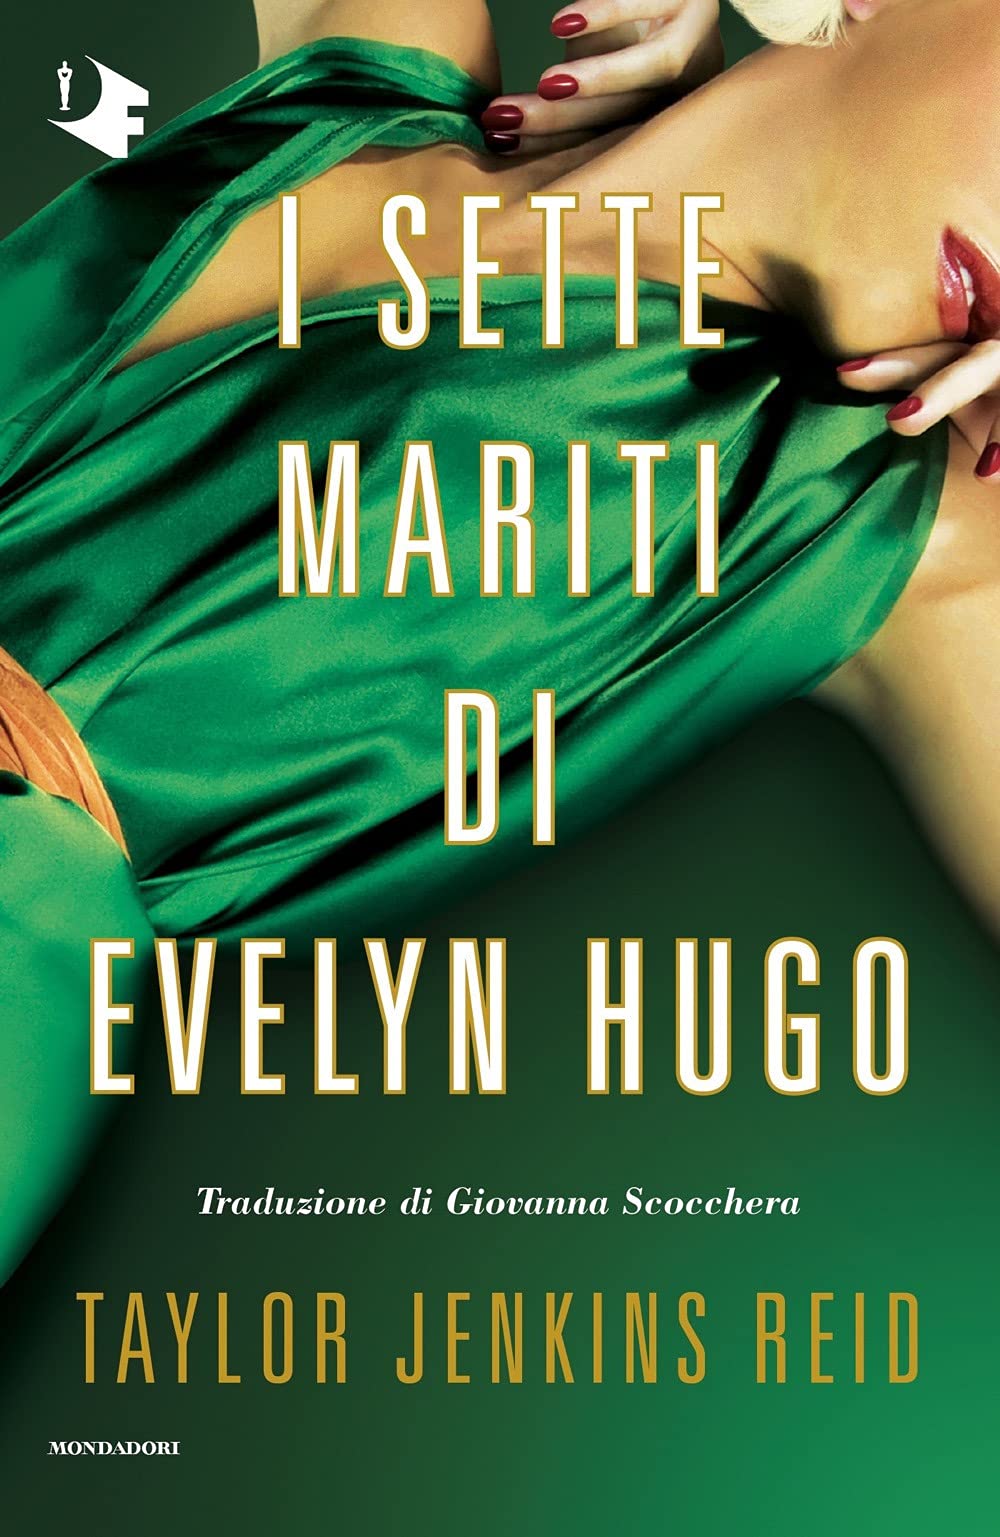 I sette mariti di Evelyn Hugo, la copertina